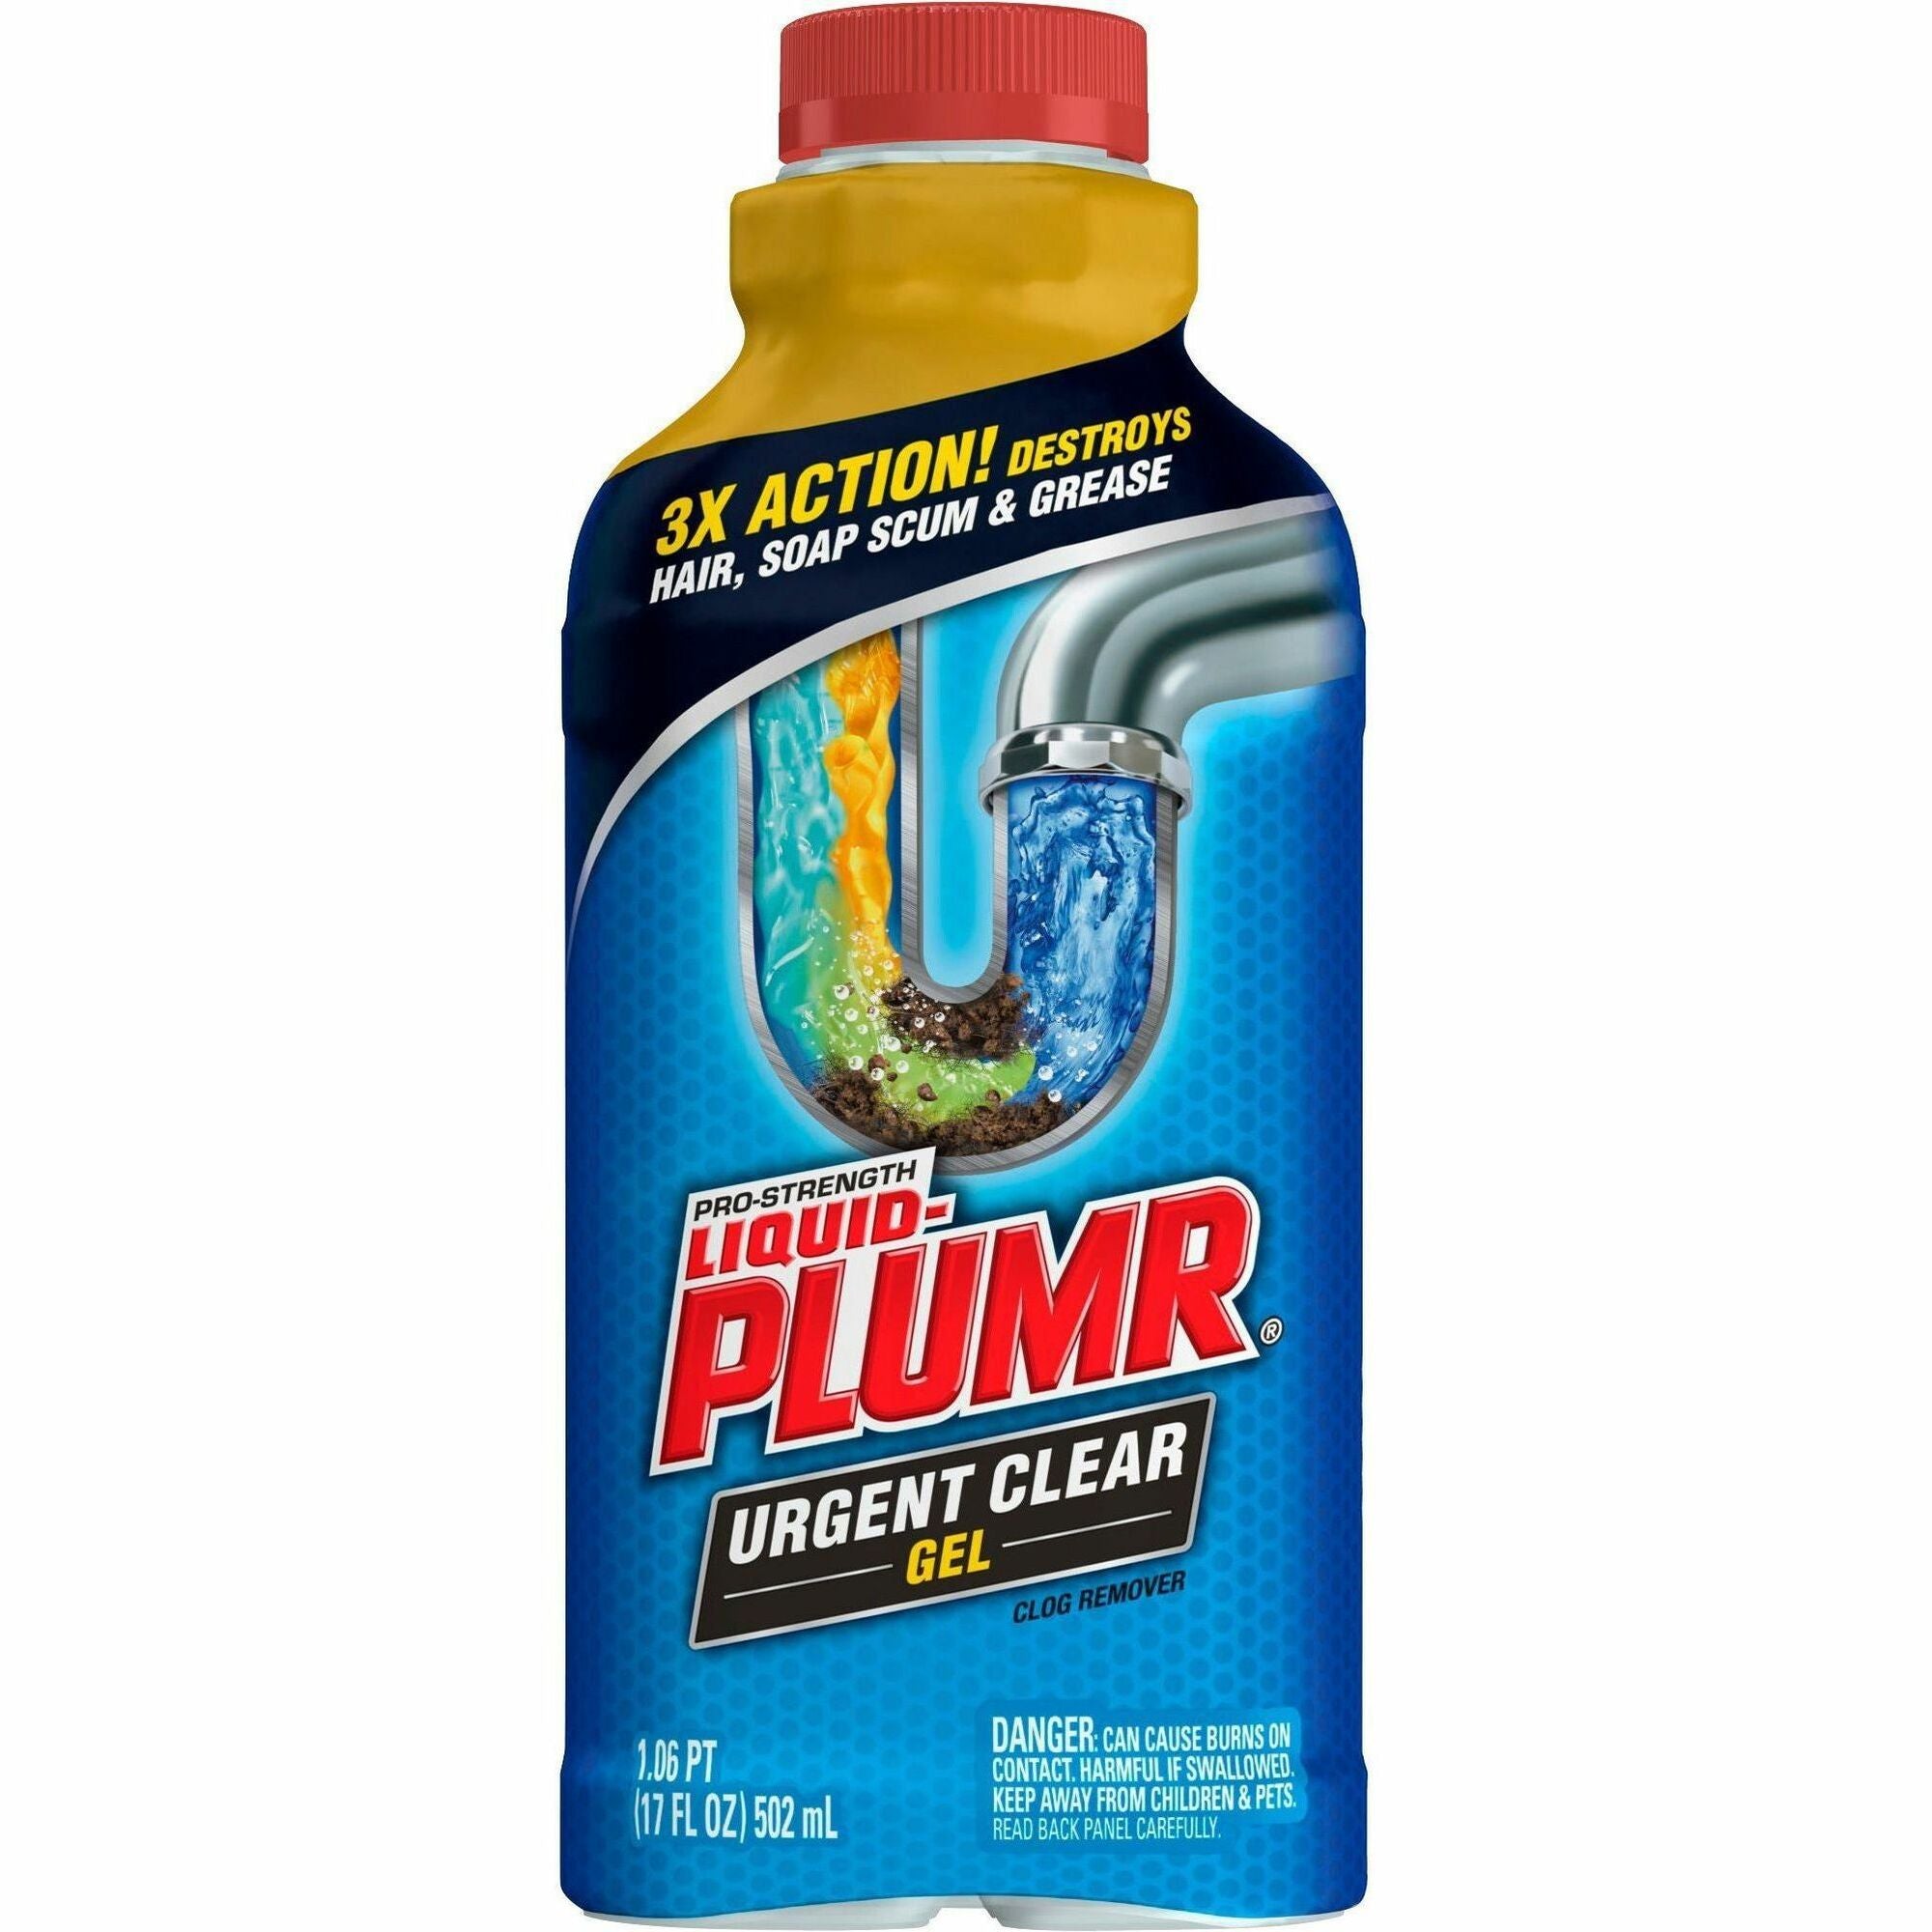 liquid-plumr-urgent-clear-pro-strength-clog-remover-gel-17-fl-oz-05-quart-bottle-1-each-blue_clo30548 - 1